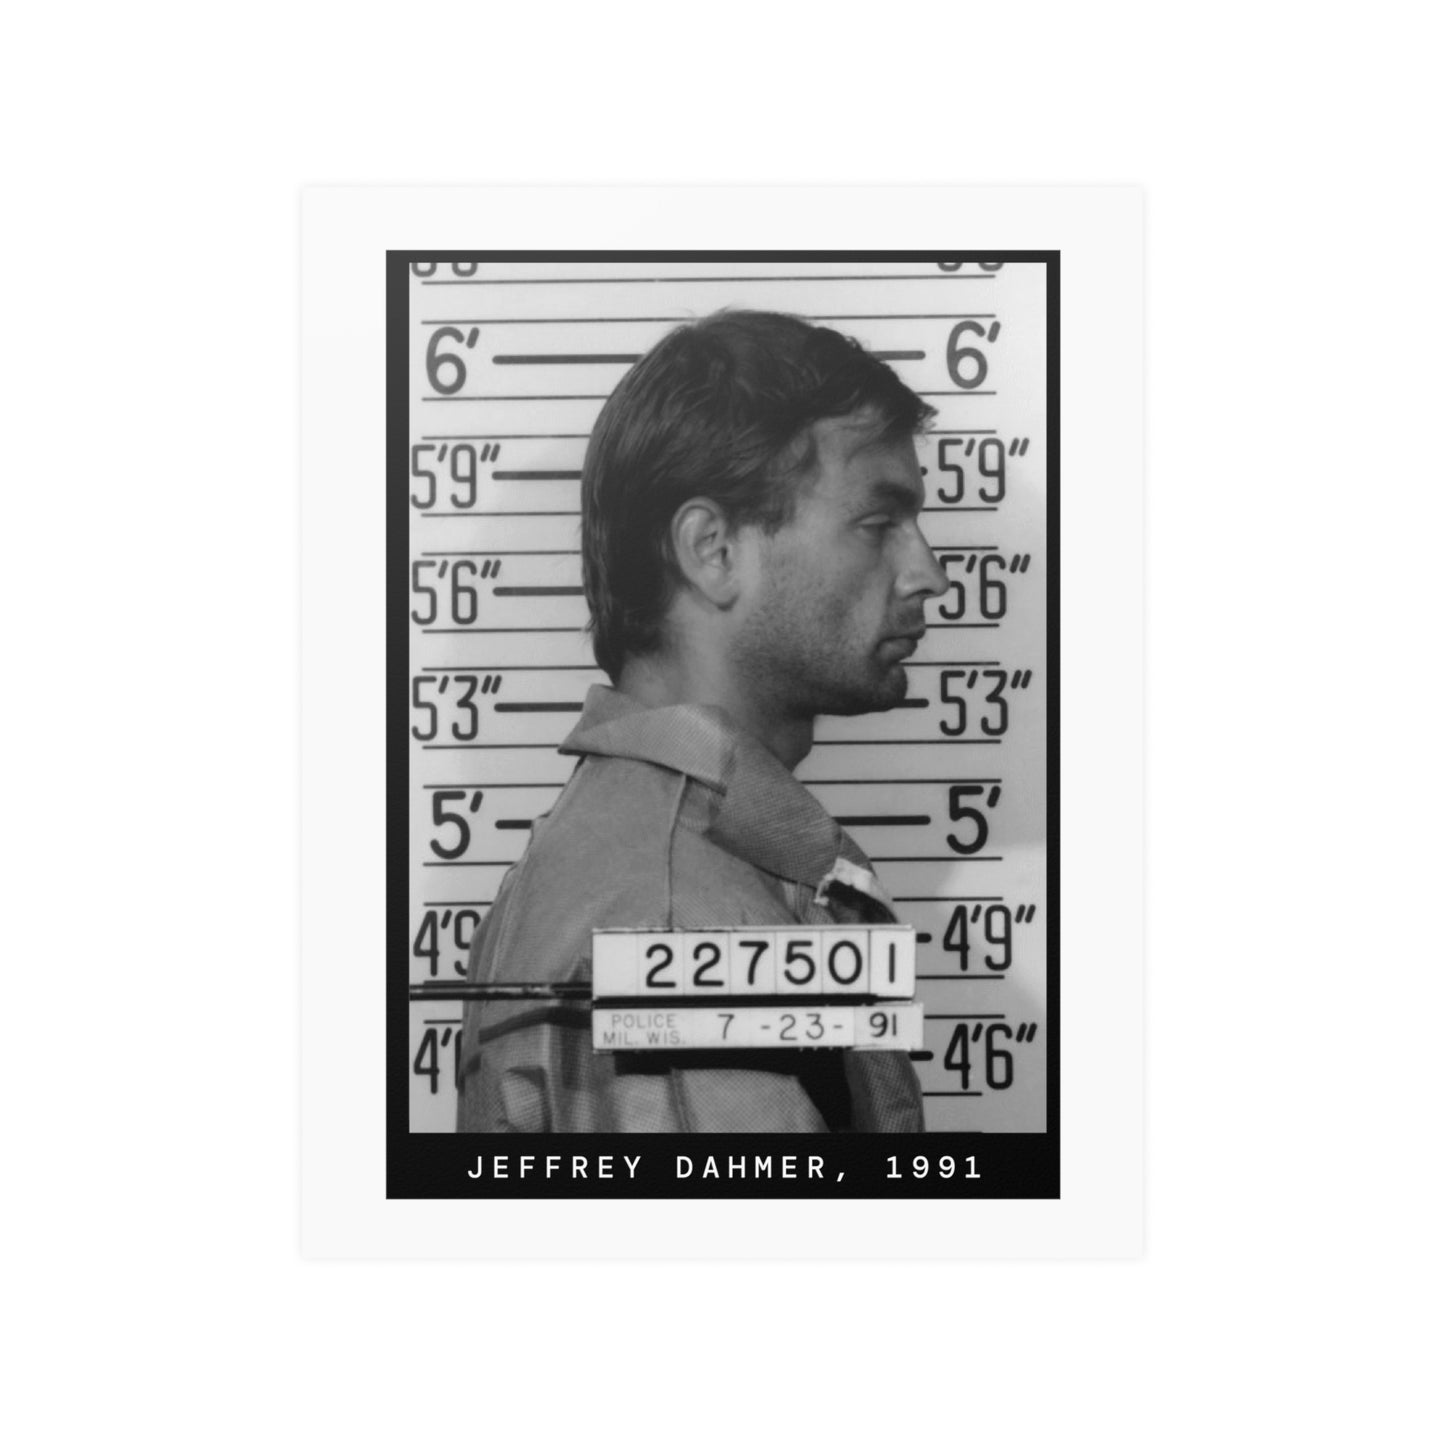 Jeffrey Dahmer, 1991 Serial Killer Mugshot Poster